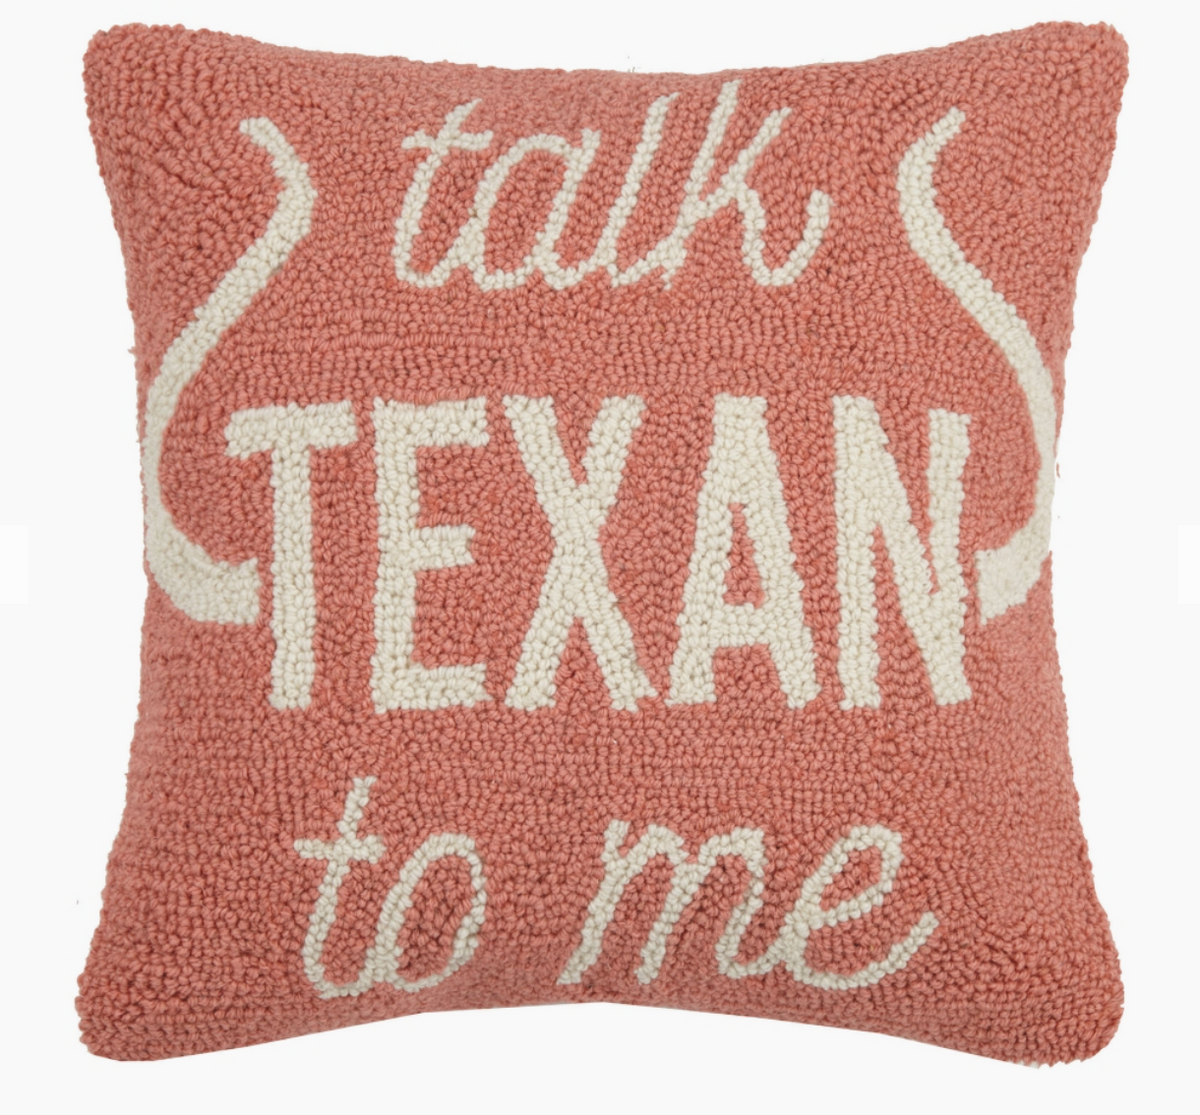 Talk Texan to Me Wool Hook Pillow